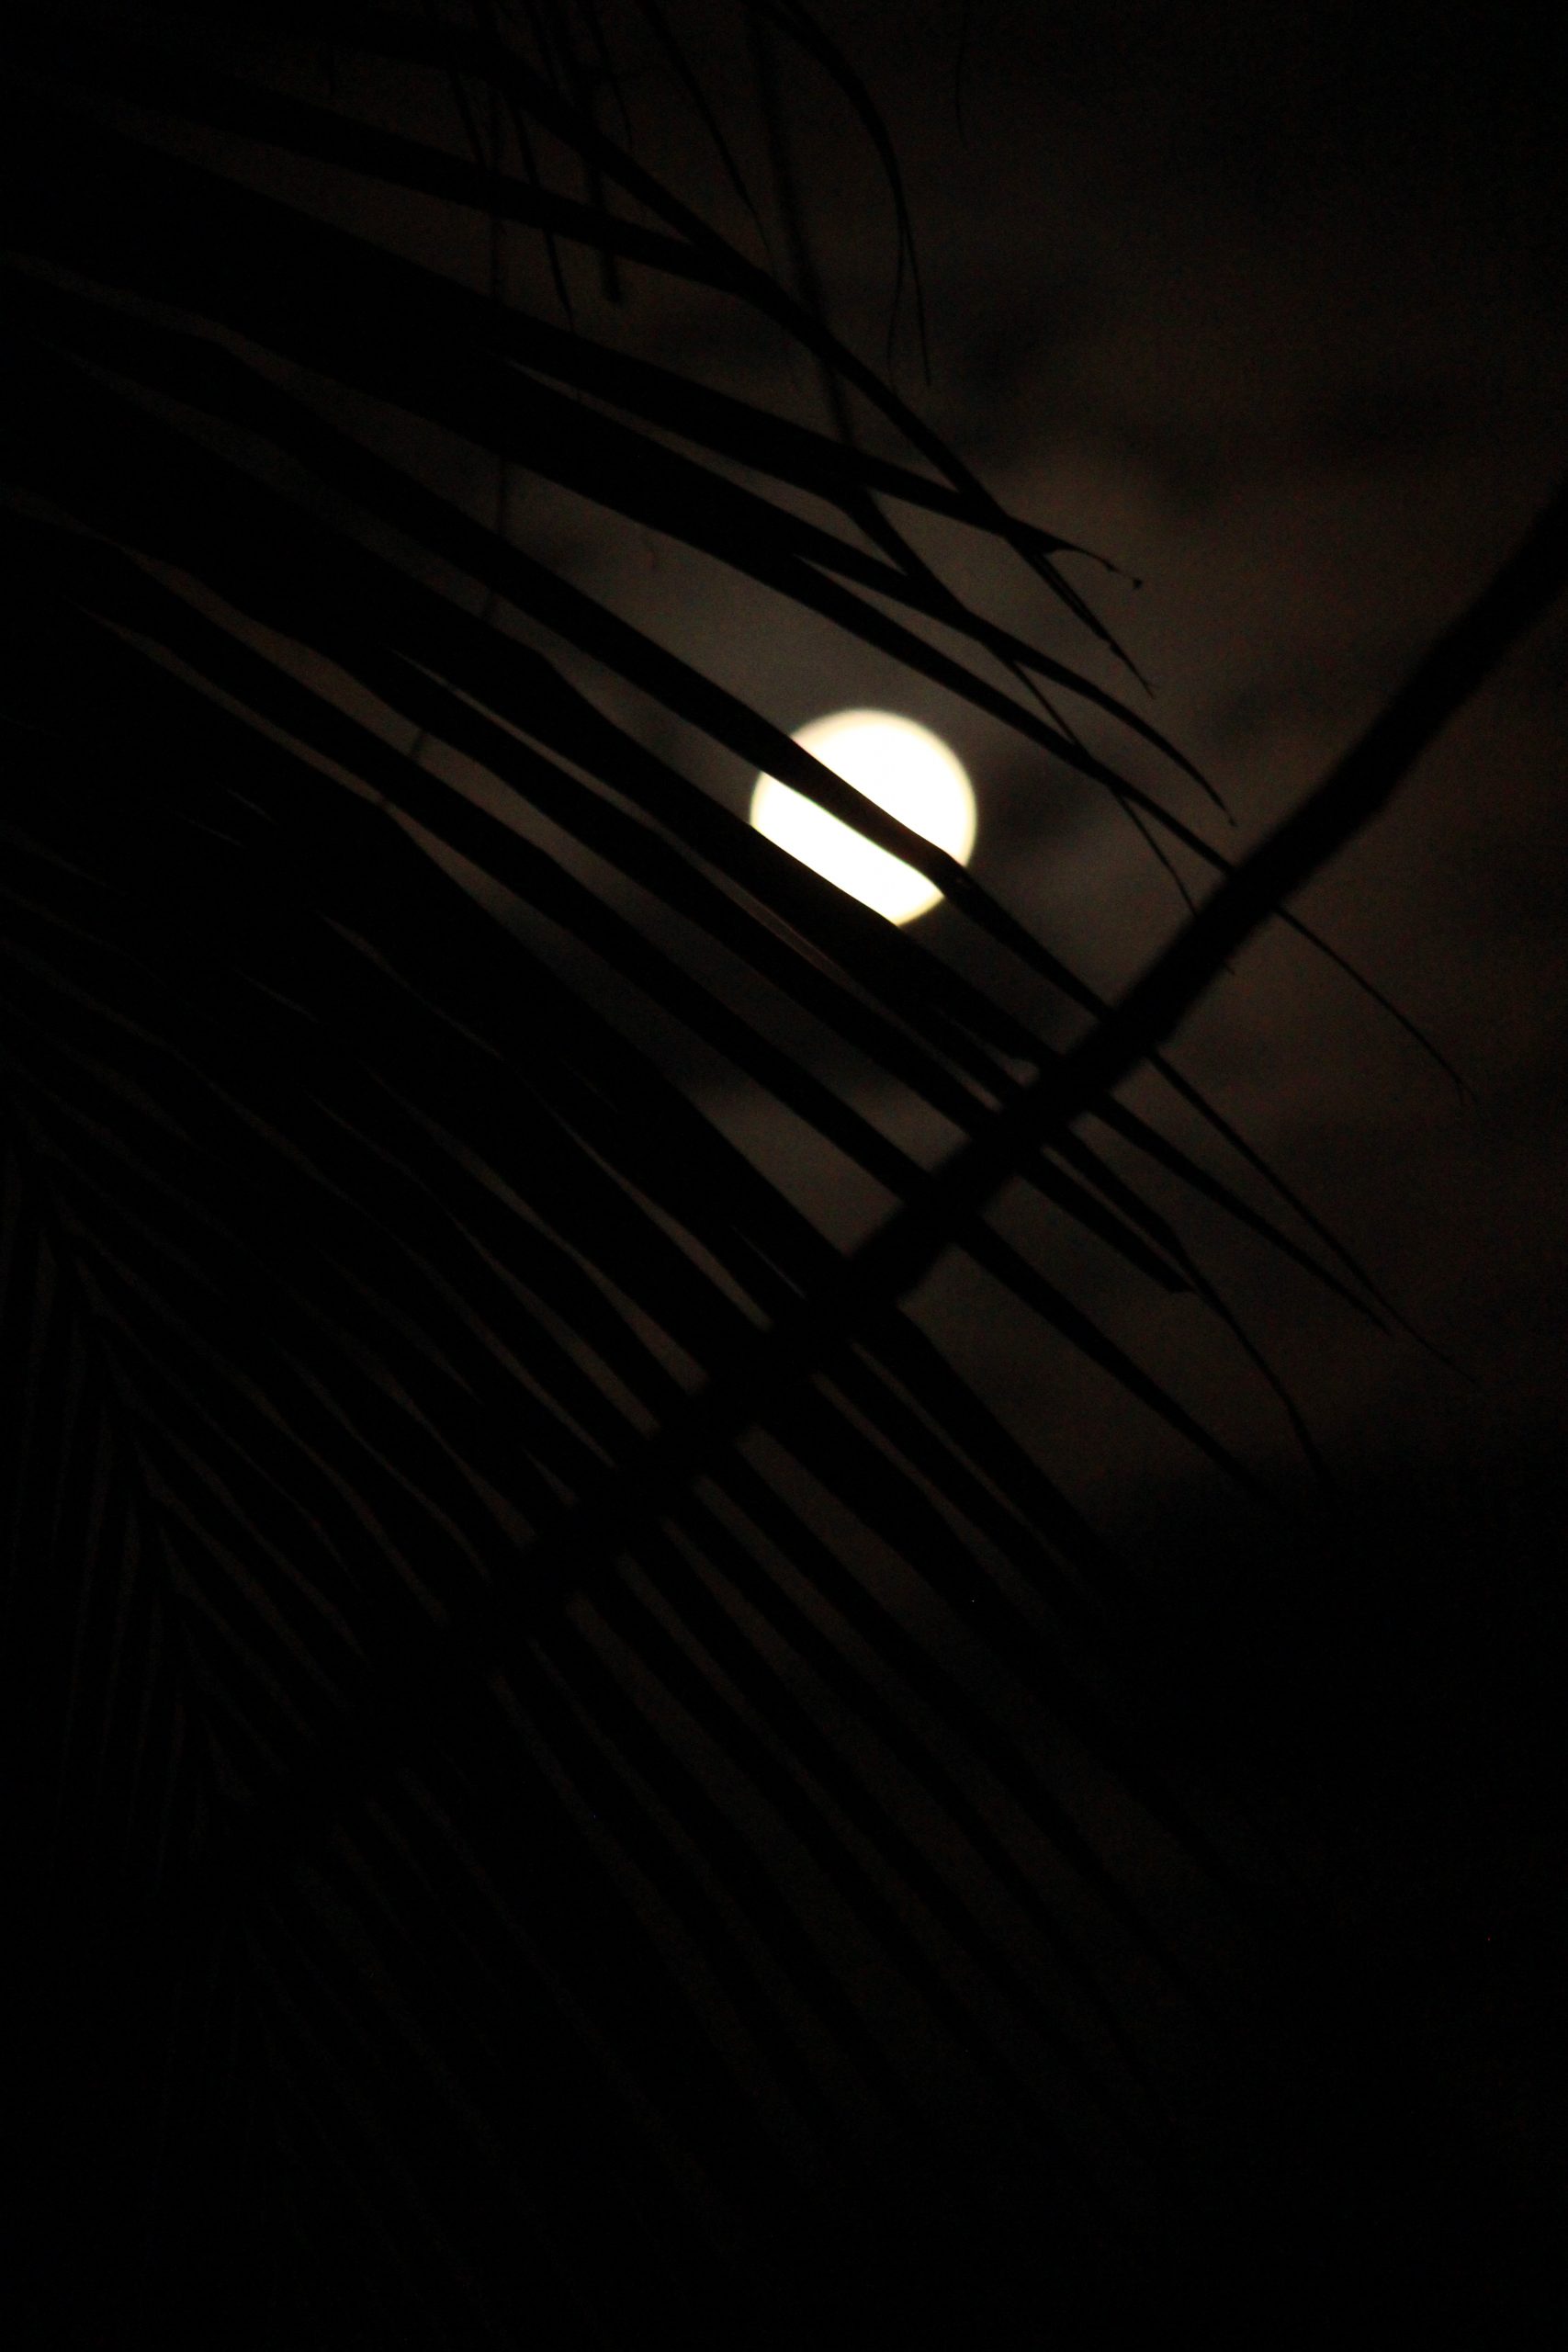 Night moon through grass